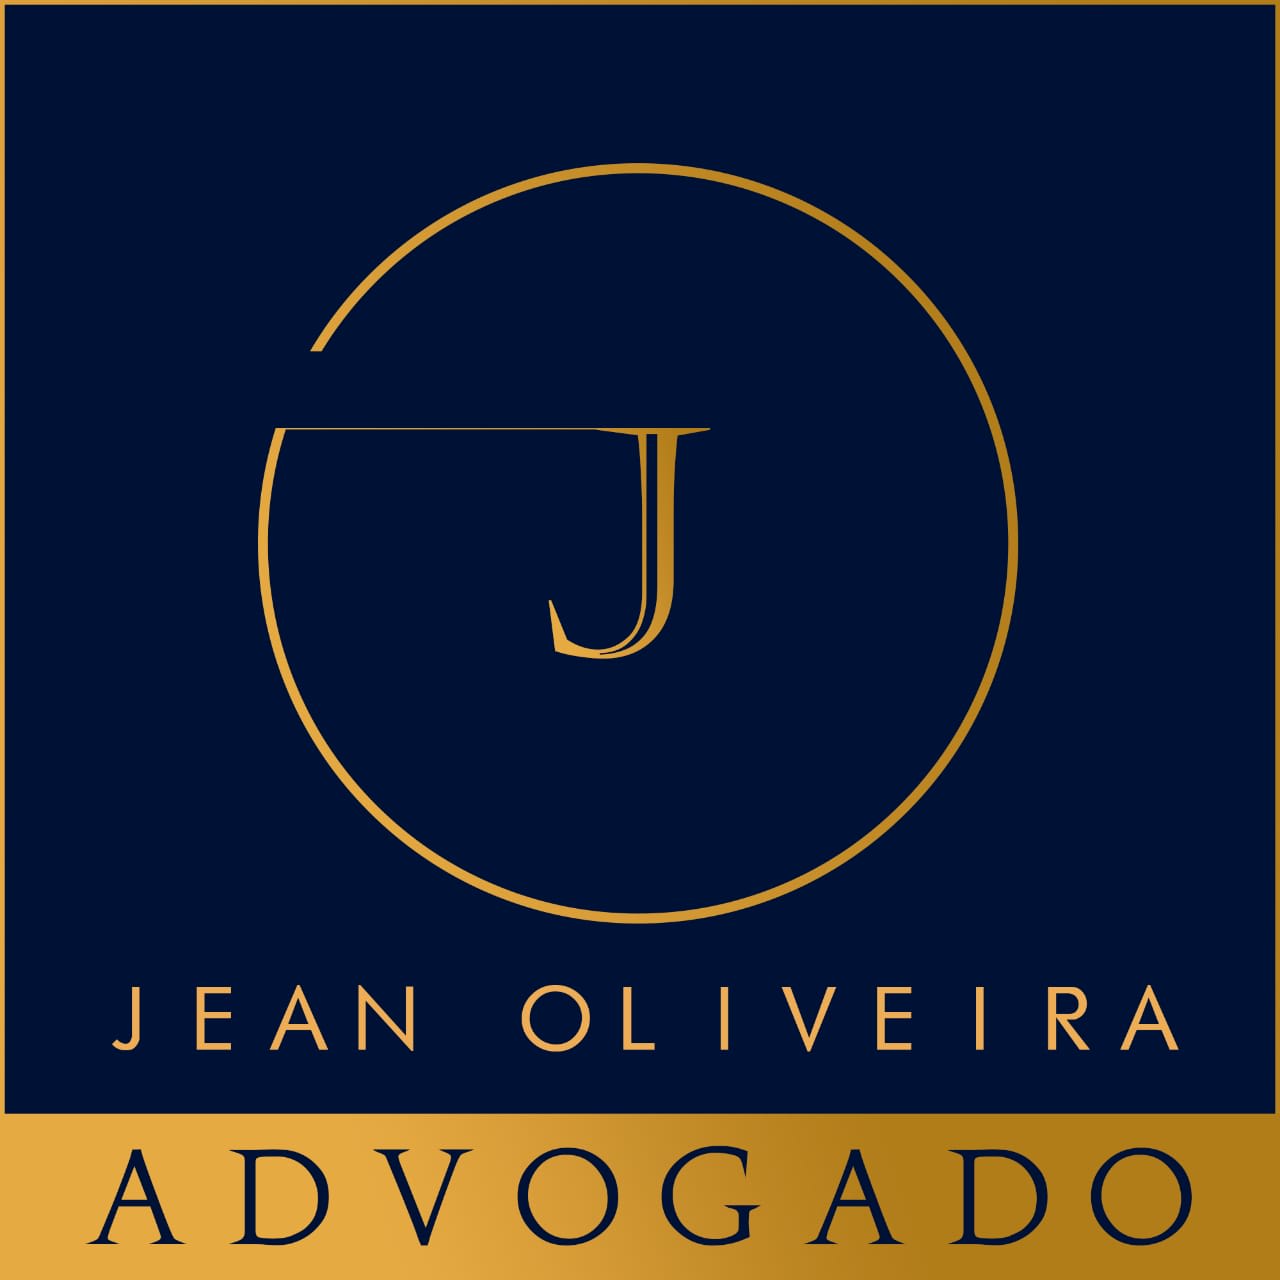 Jean Oliveira Advogado